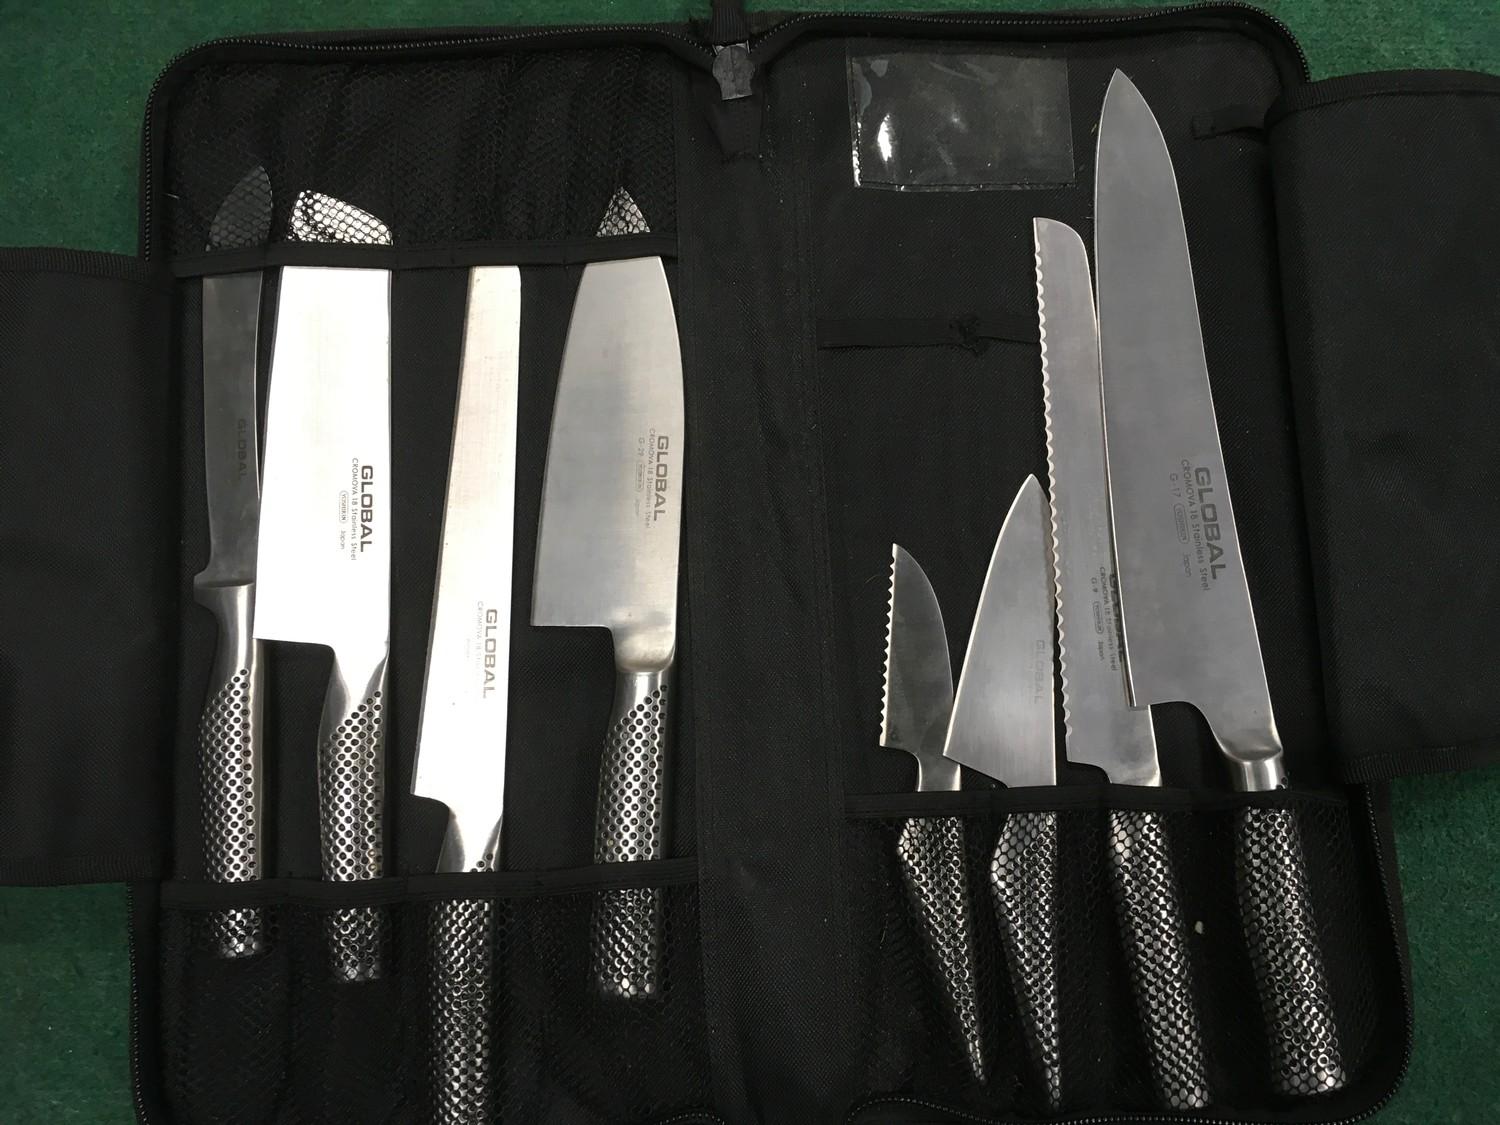 Global Knife set in case (REF 11).